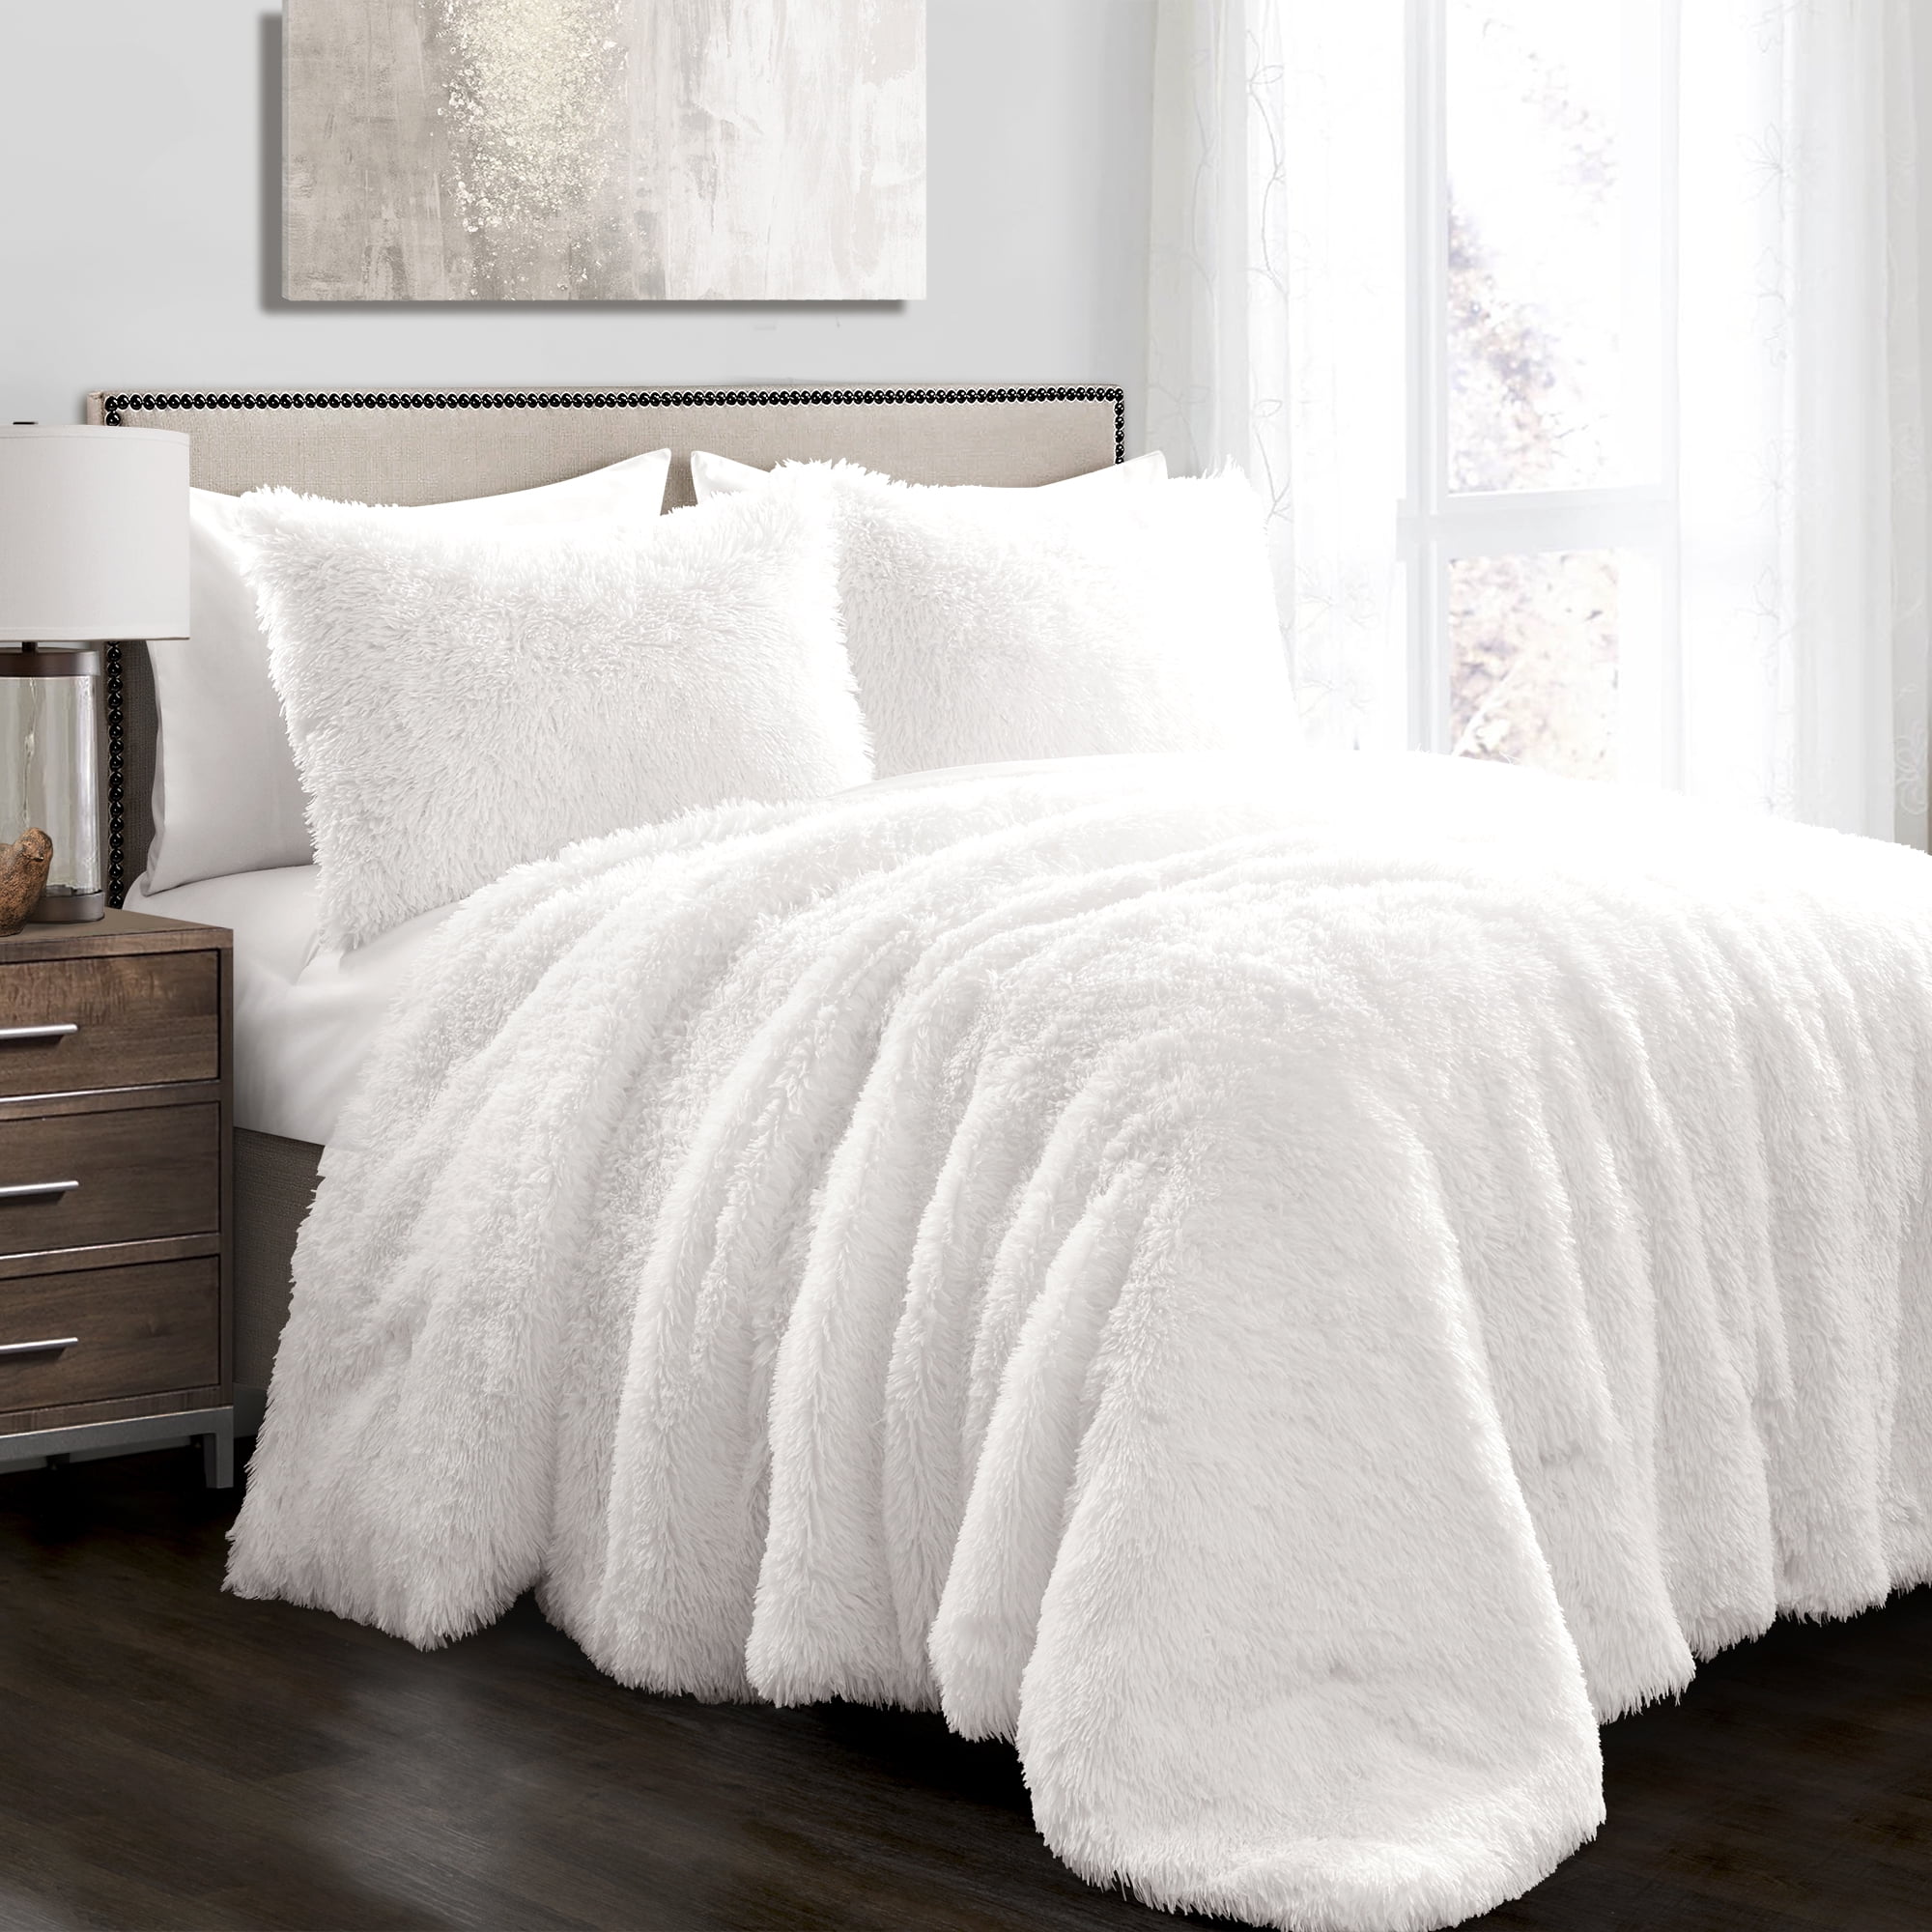 Lush Decor Emma Faux Fur Comforter White 3Pc Set King - Walmart.com ...